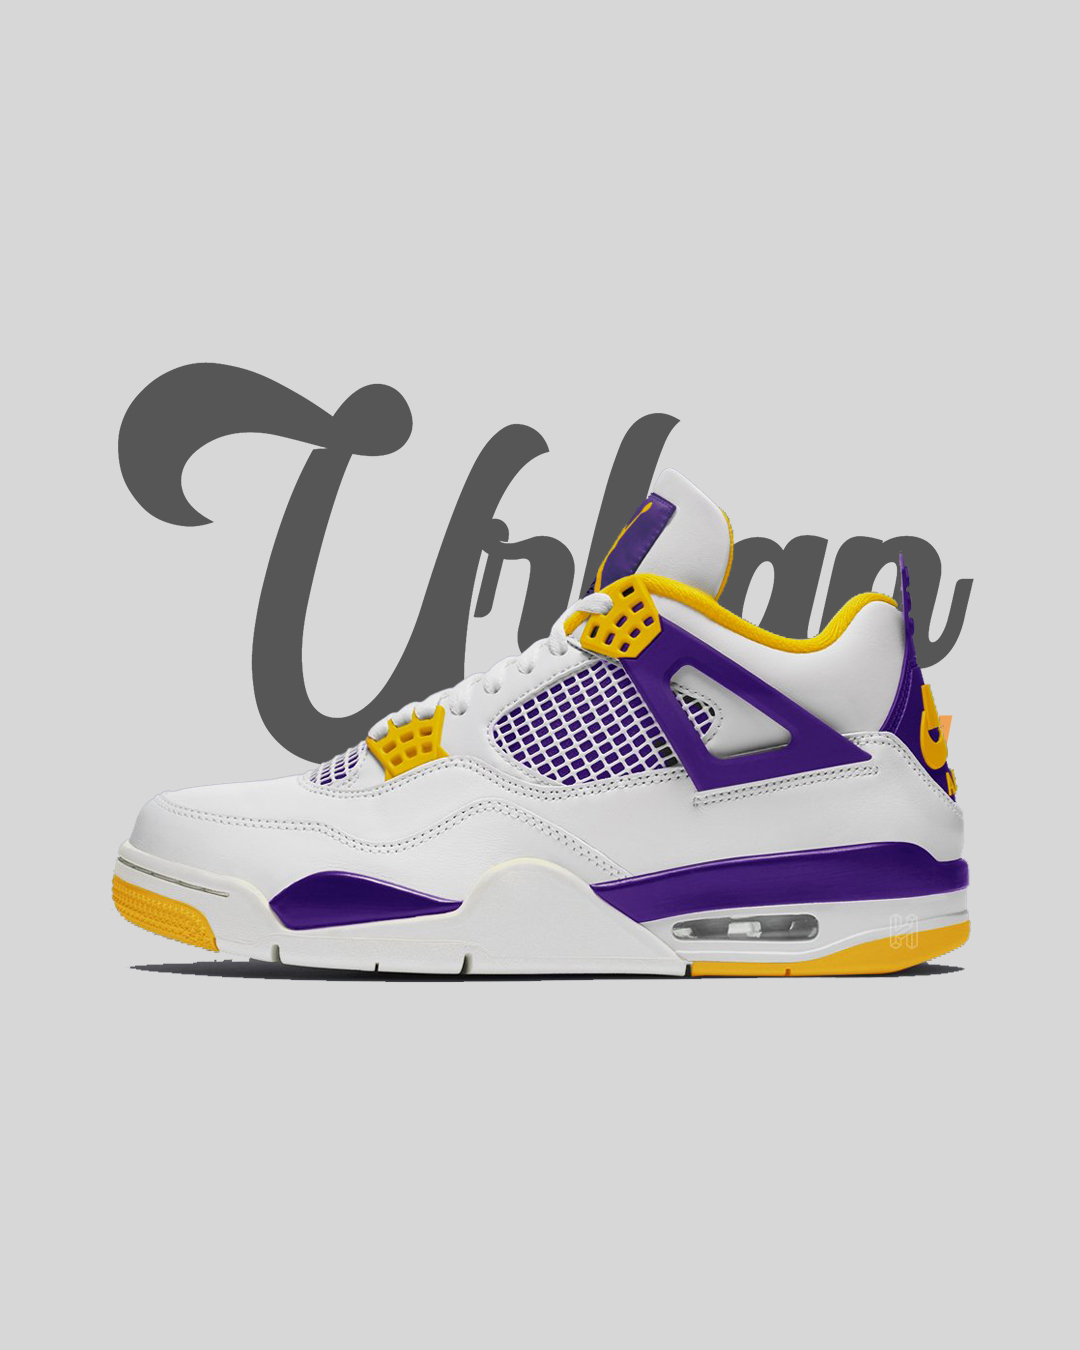 Air Jordan 4 “Lakers Home” – Urban Collection